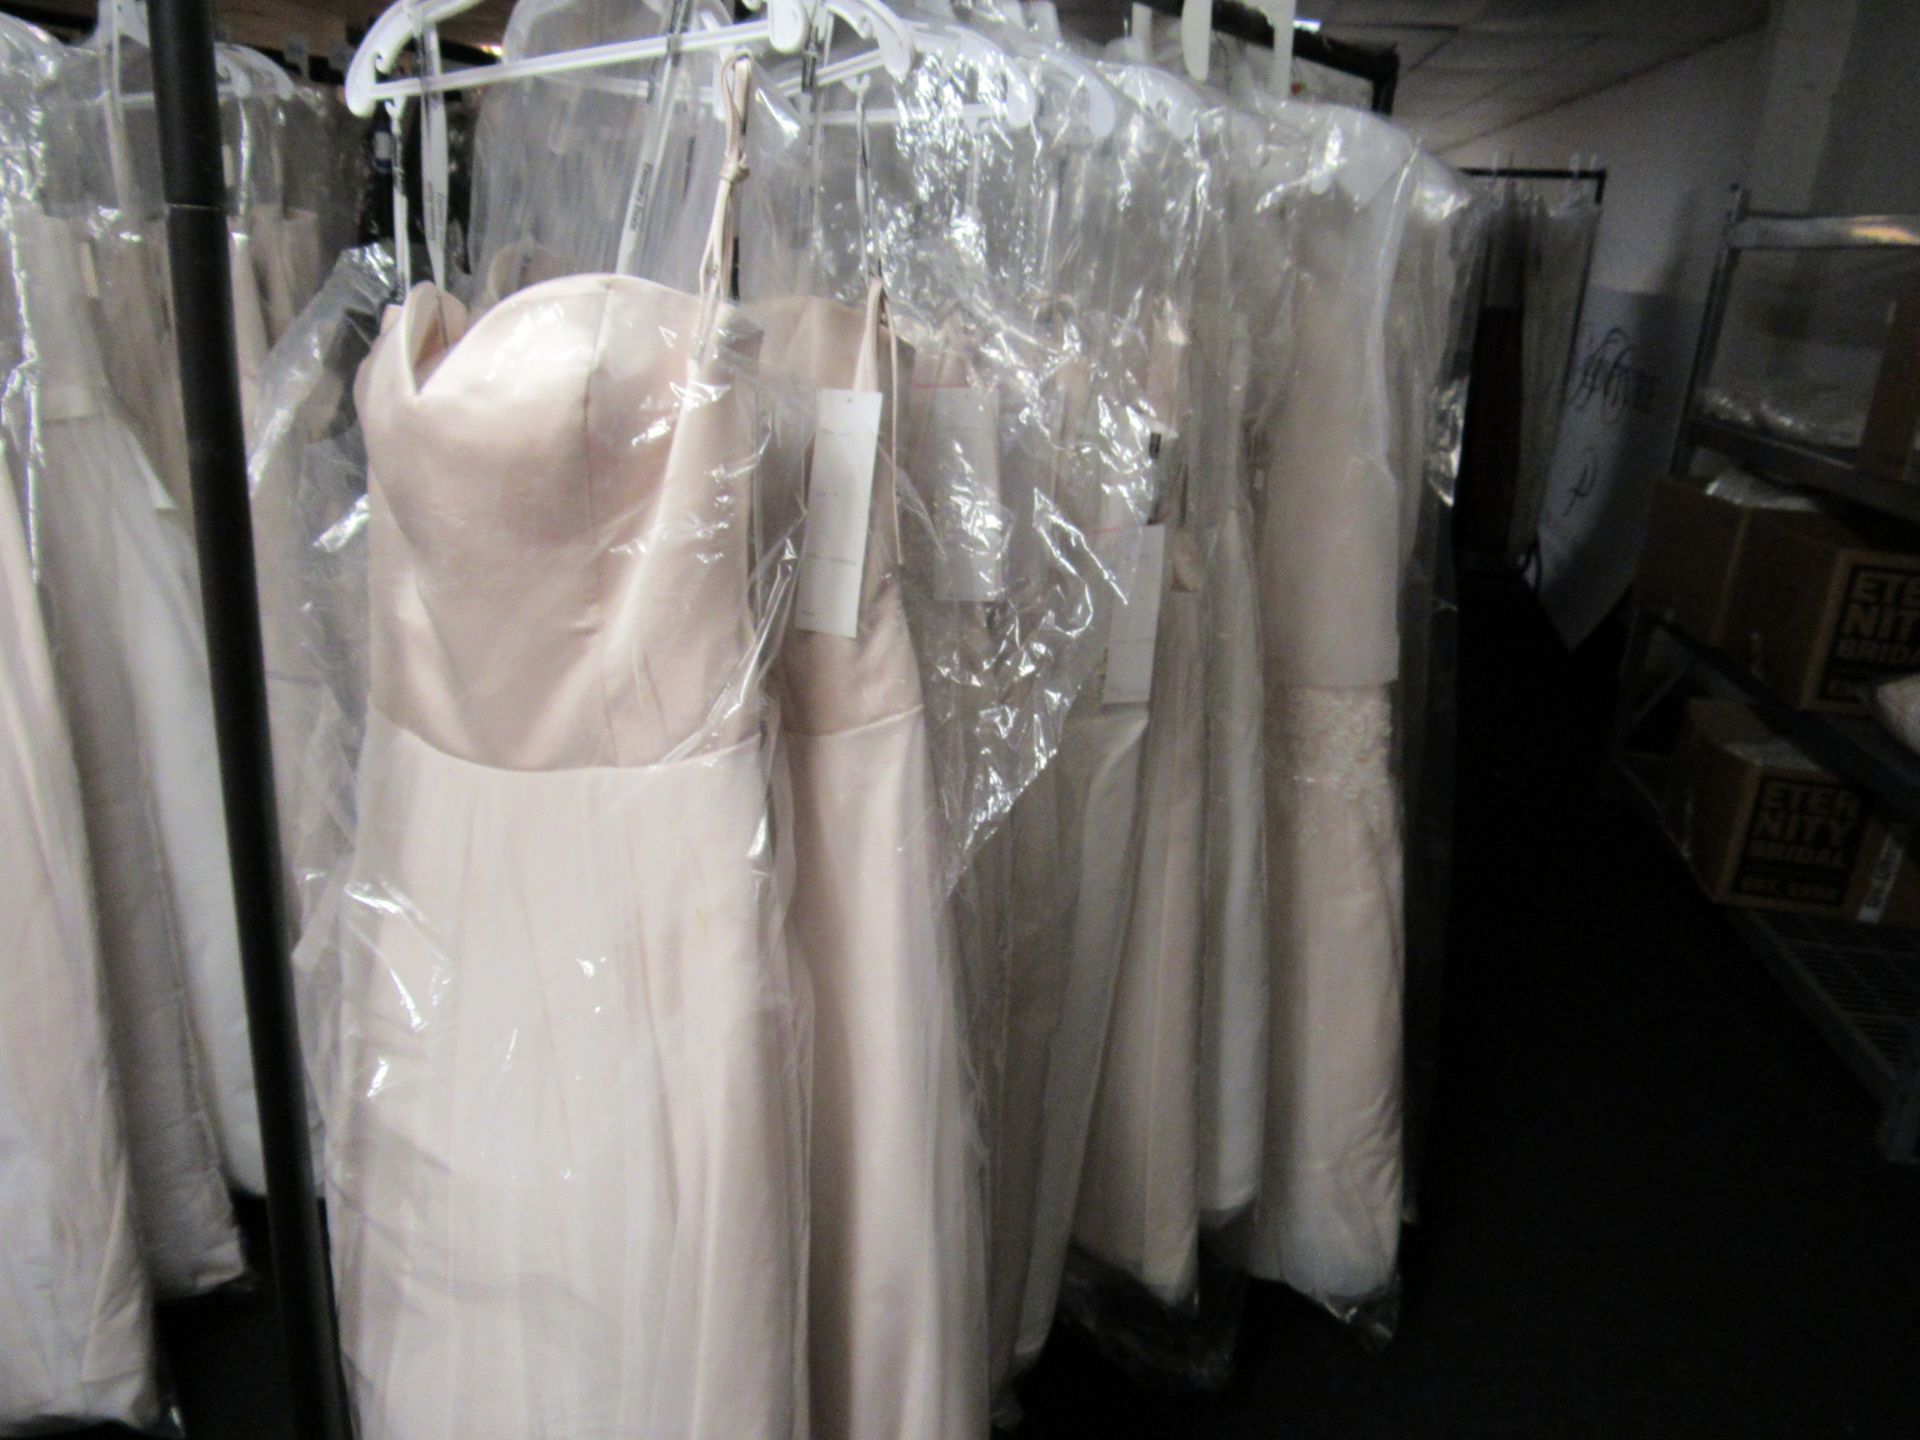 15 Eternity Bridal dresses to rail - Image 2 of 4